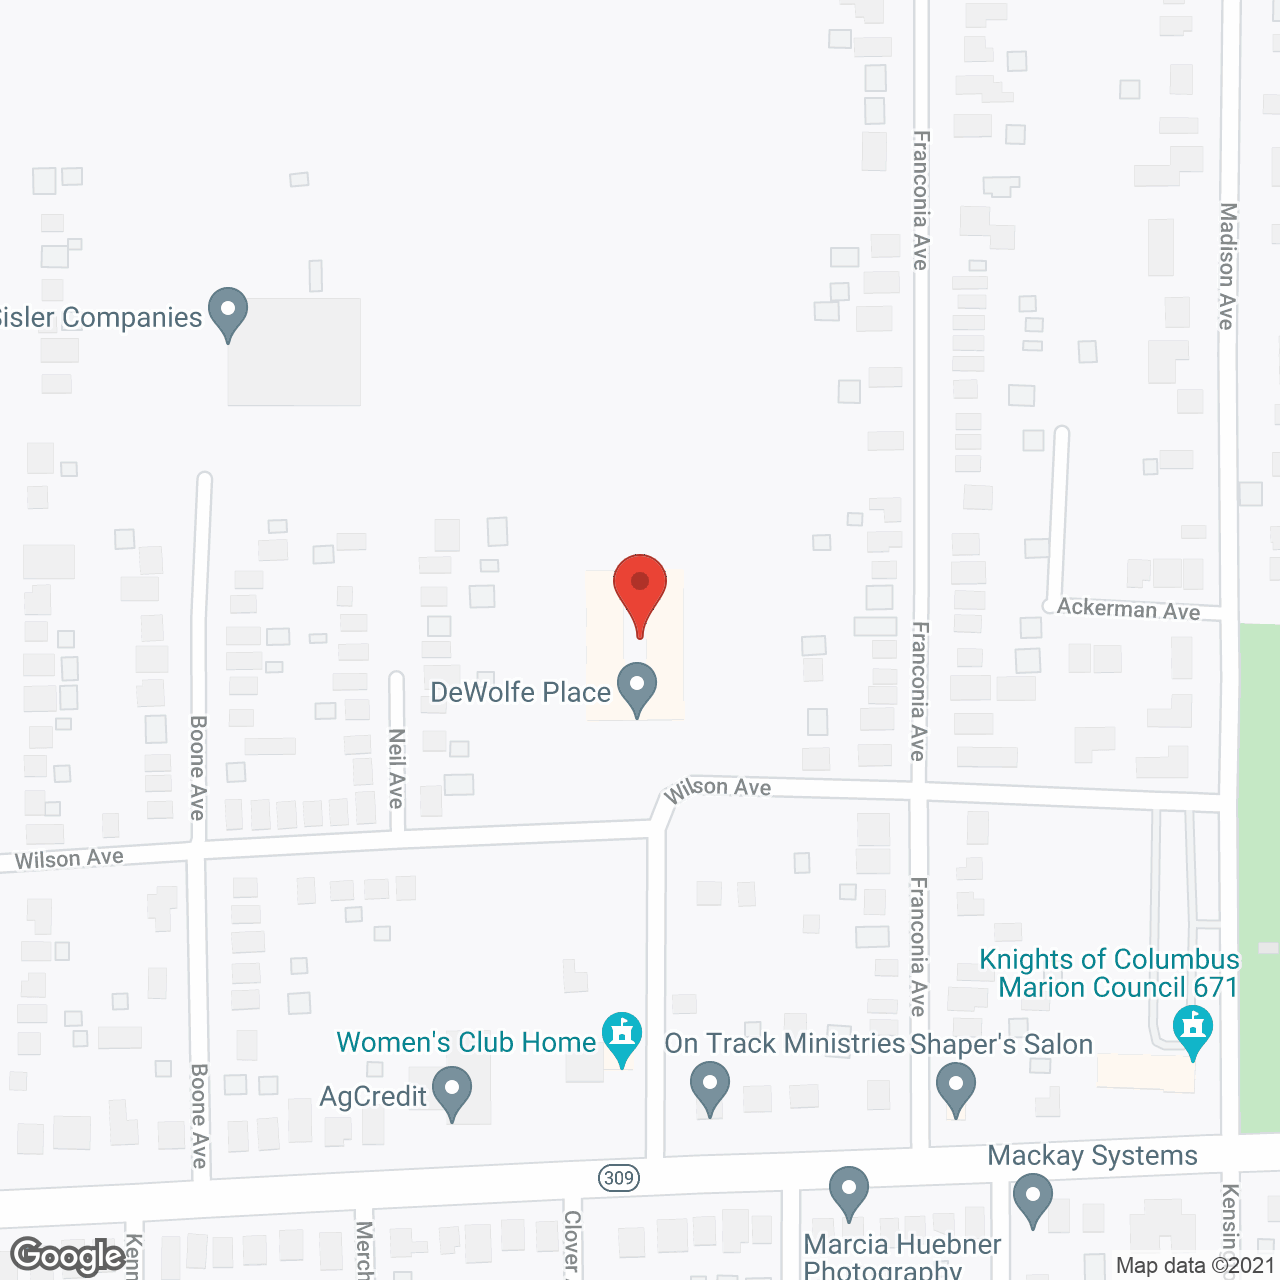 DeWolfe Place in google map